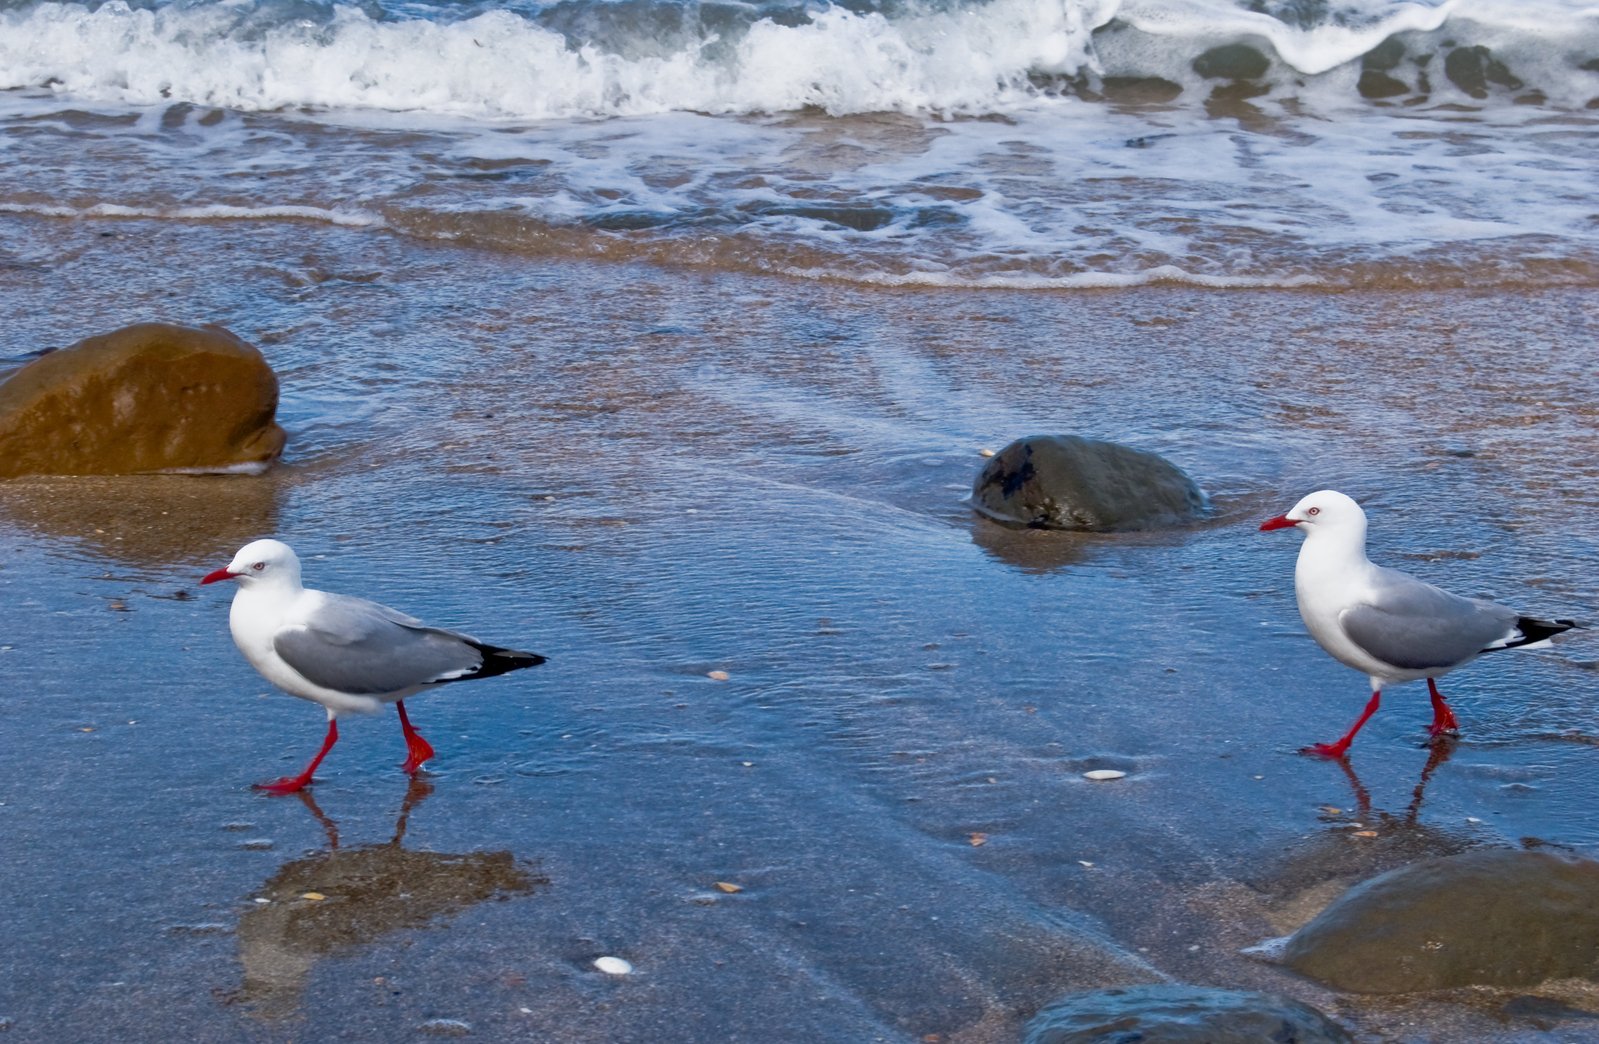 two seagulls walking on wet sand near the ocean